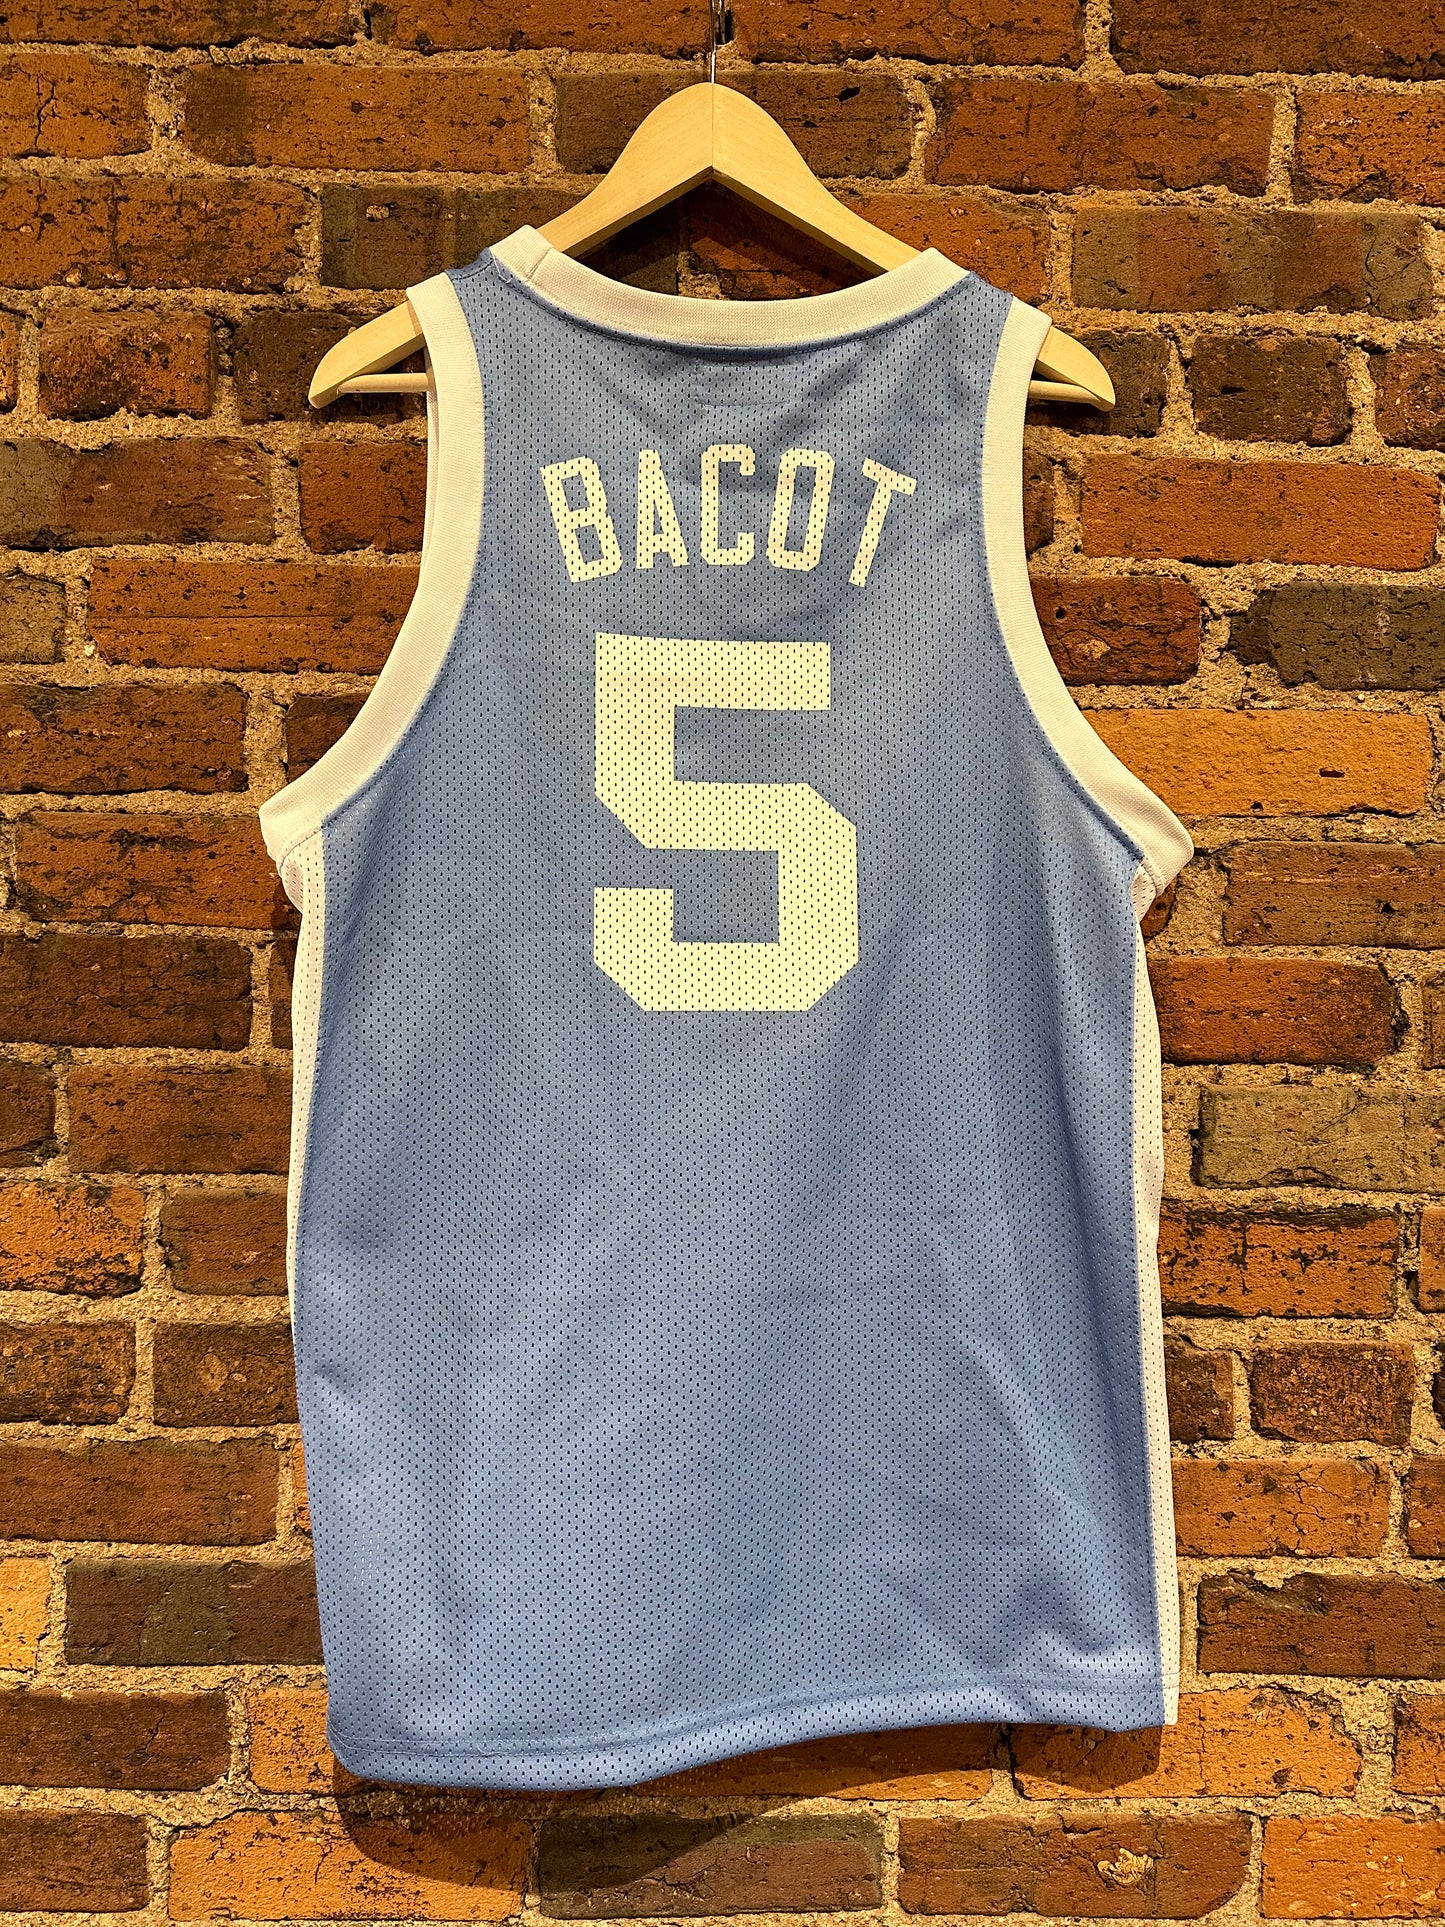 University of North Carolina 'UNC' Bacot #5 NCAA Jersey - Retro Brand